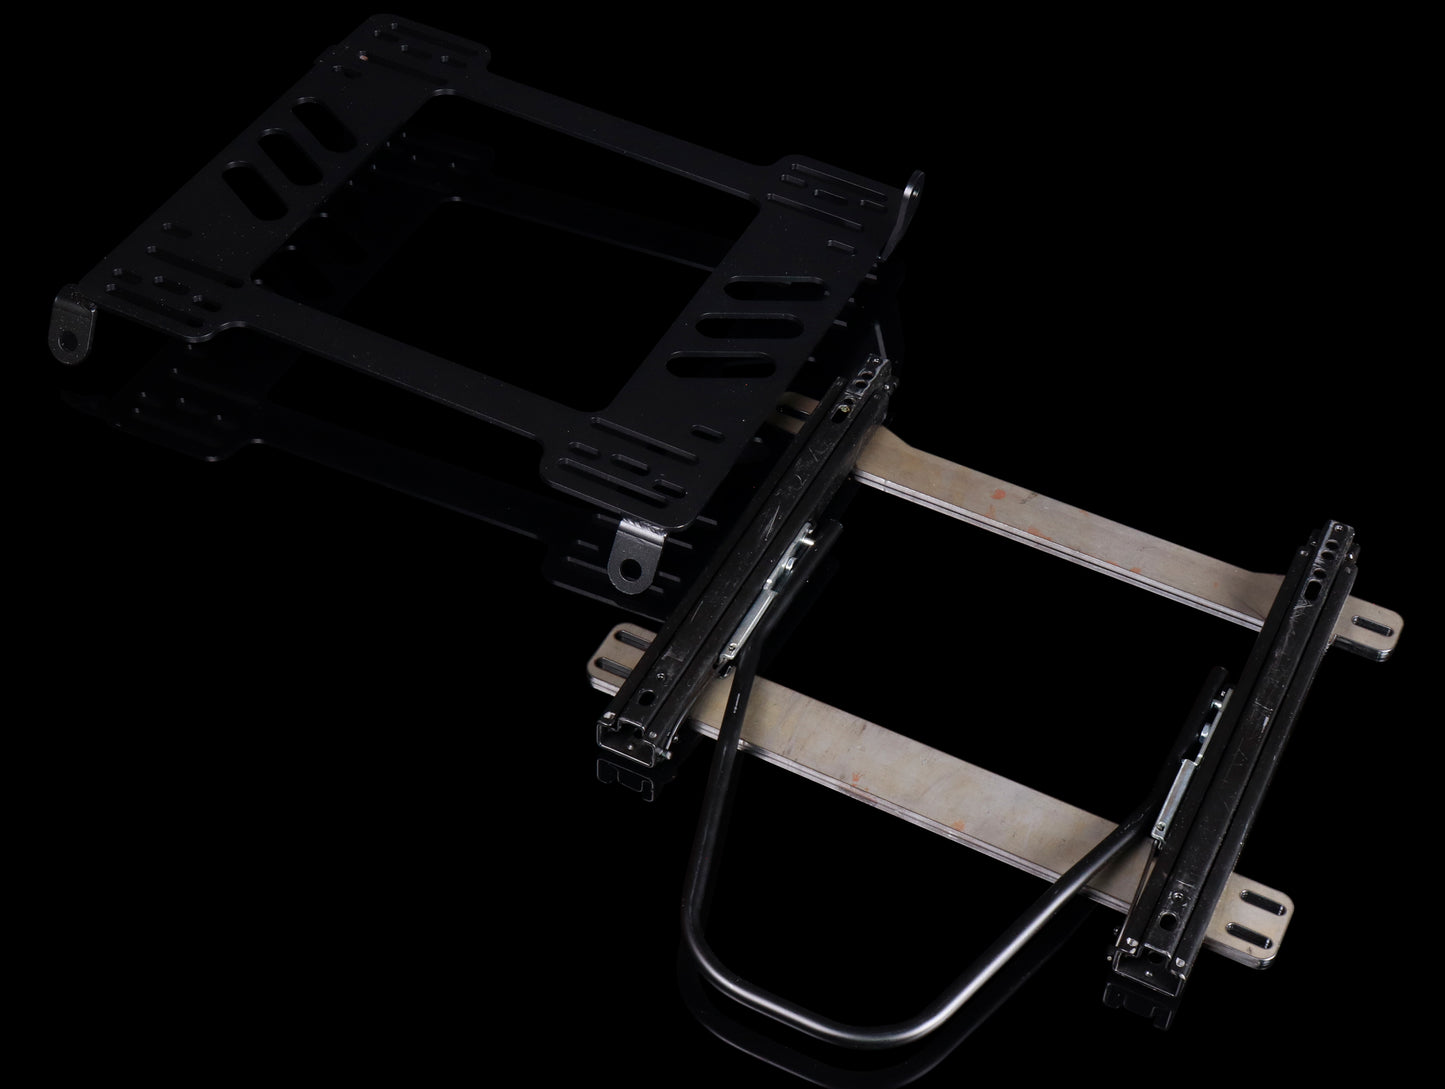 PLM Seat Rail Bracket For Recaro LS LX SR2 SR3 SR4 SRD